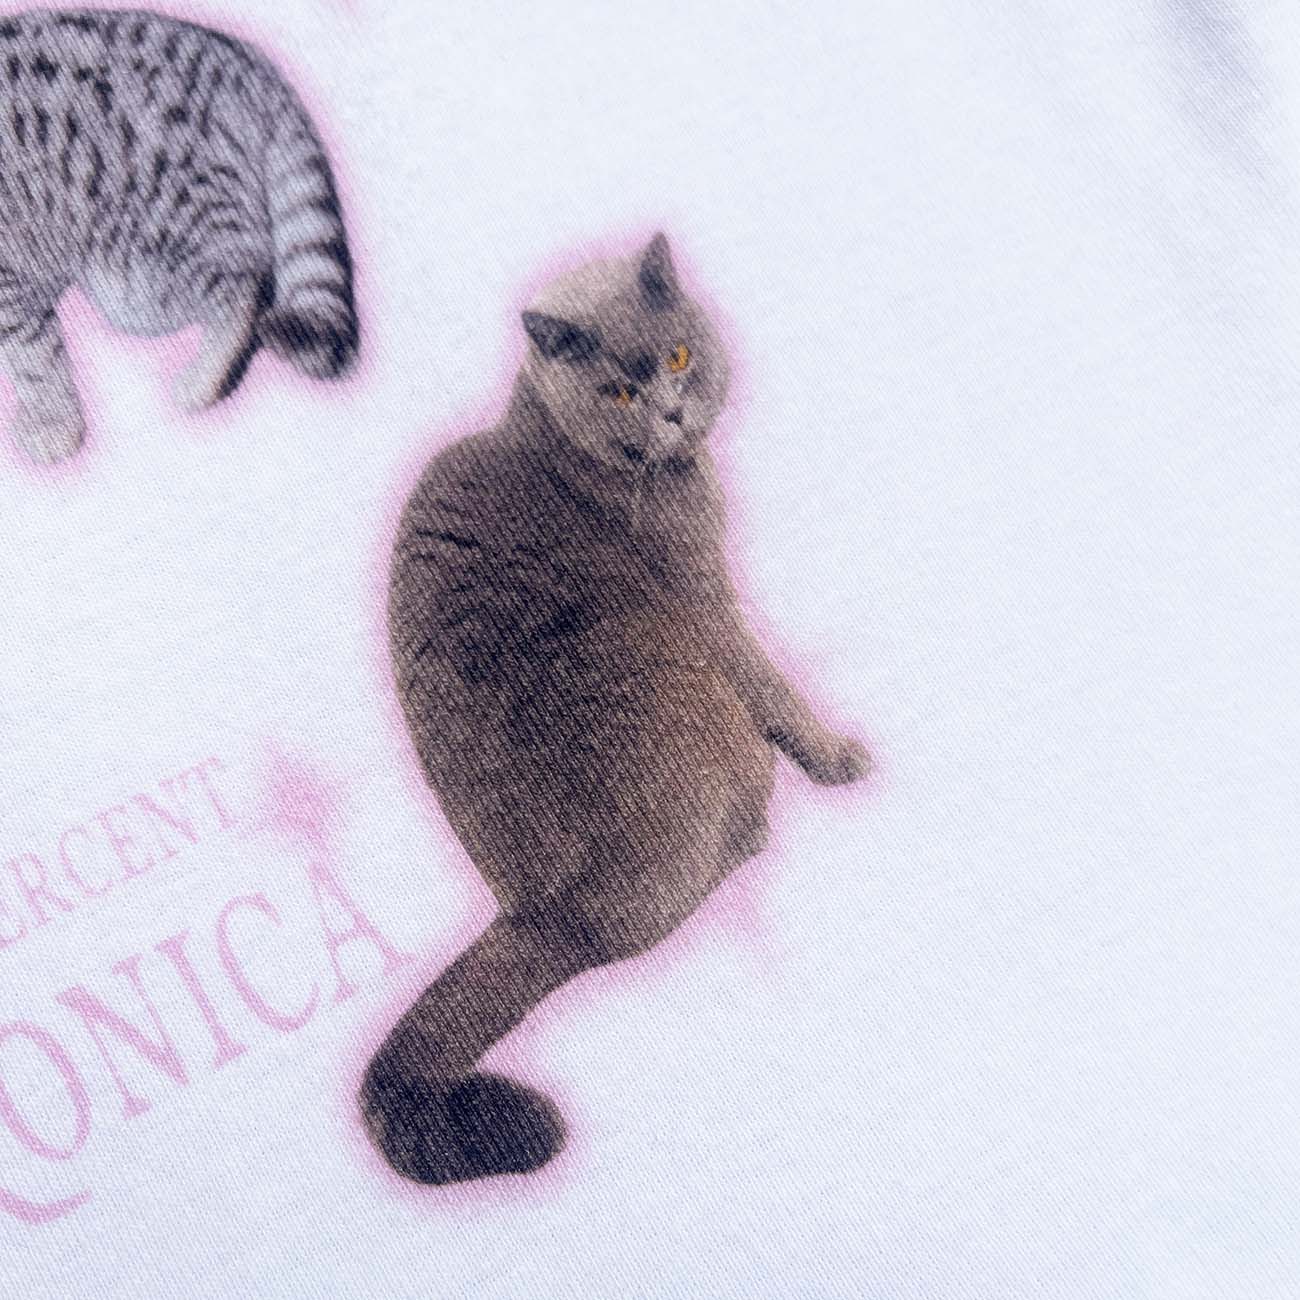 100% Electronica Cat Shirt